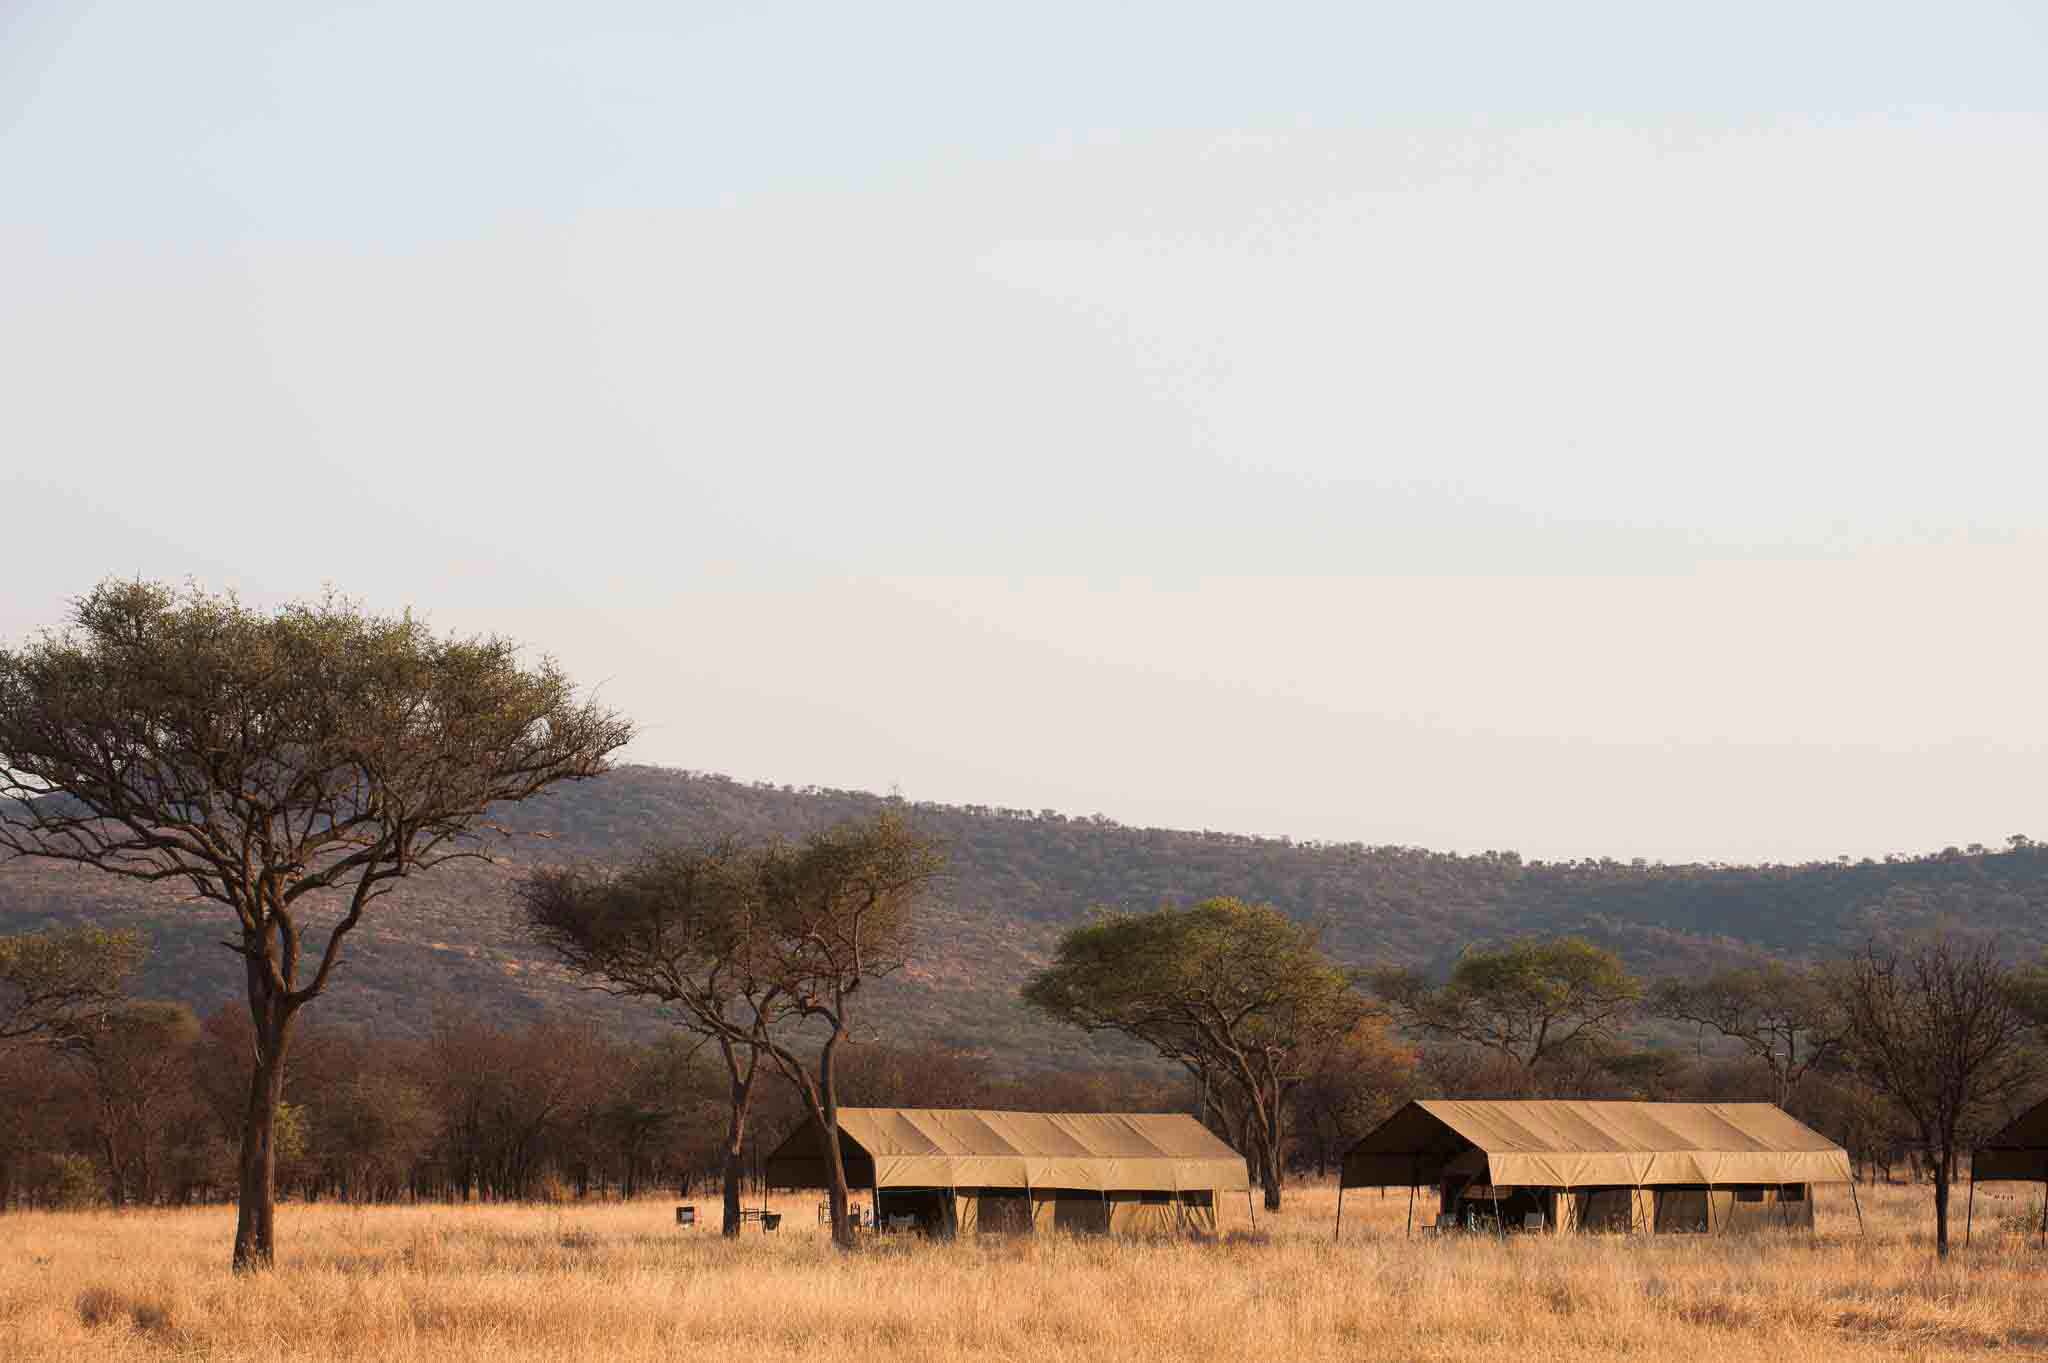 kati kati tented camp, serengeti, tanzania